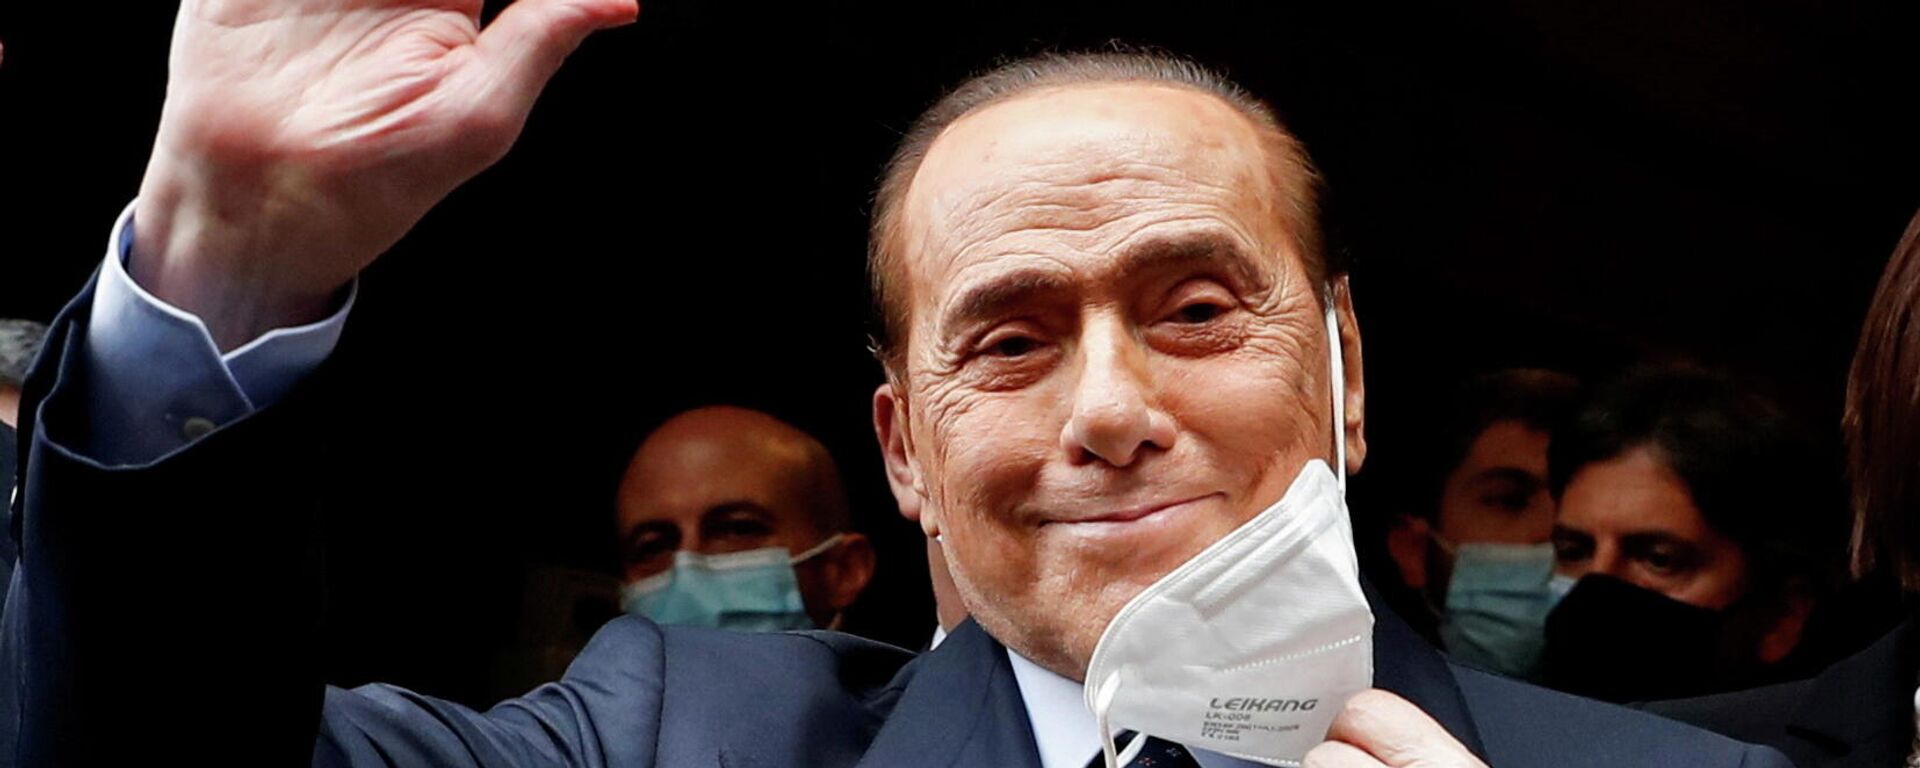 Silvio Berlusconi, el ex primer ministro de Italia - Sputnik Mundo, 1920, 26.05.2021